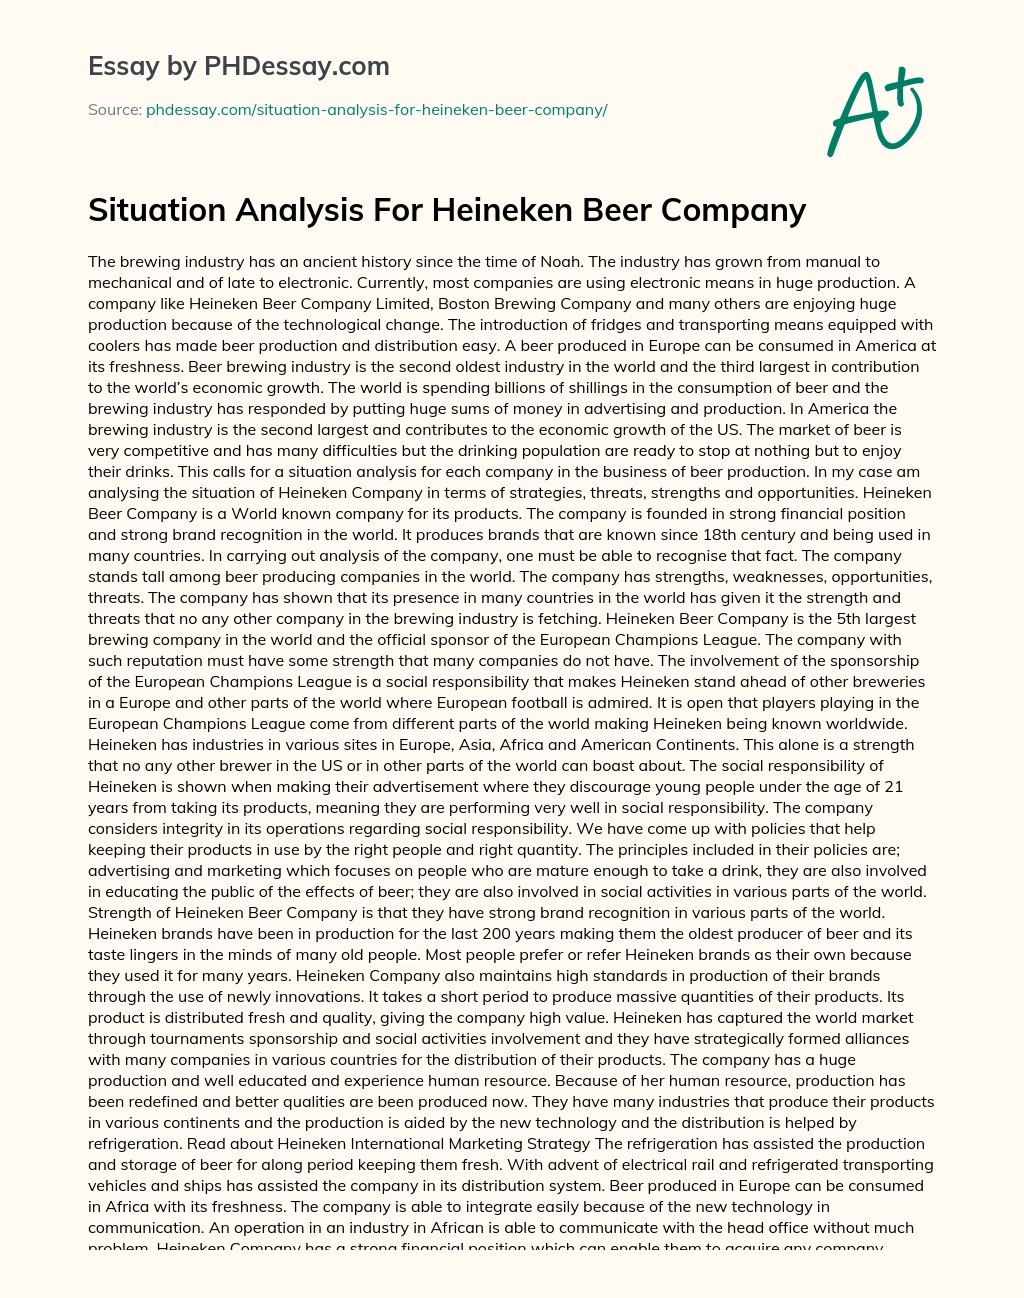 Situation Analysis For Heineken Beer Company essay